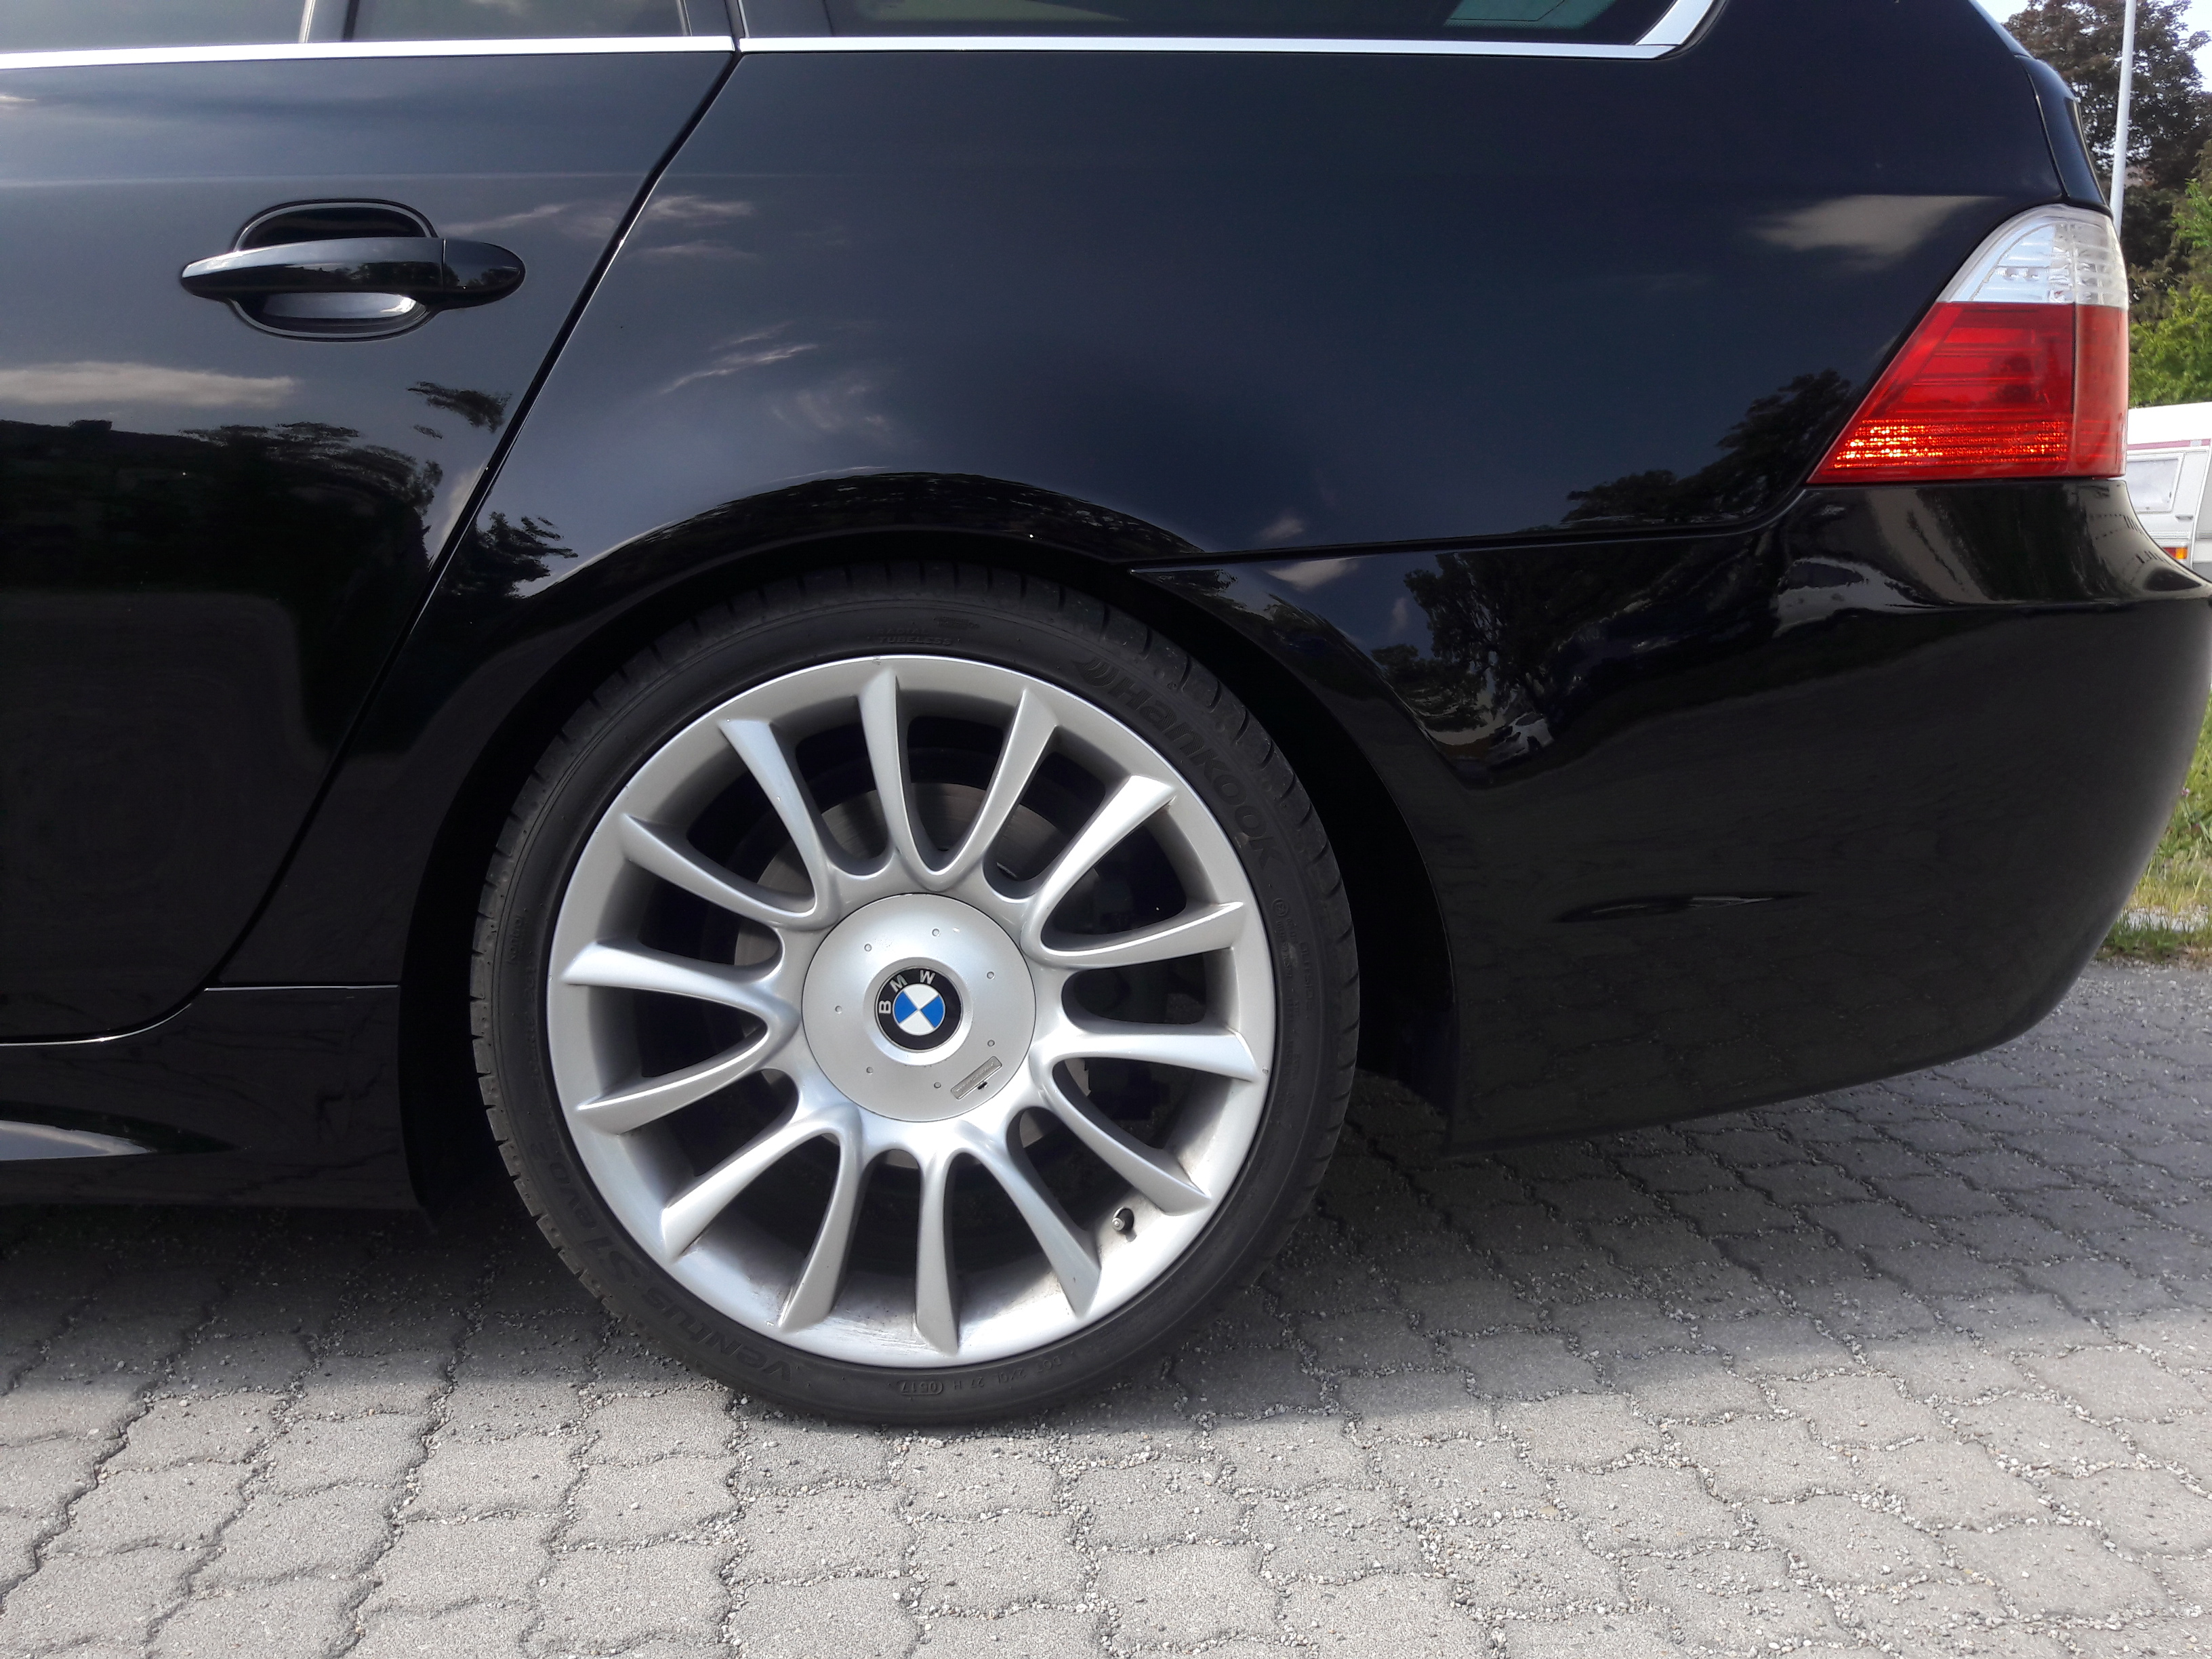 BMWklub.pl • Zobacz temat e60 530d jakie amortyzatory